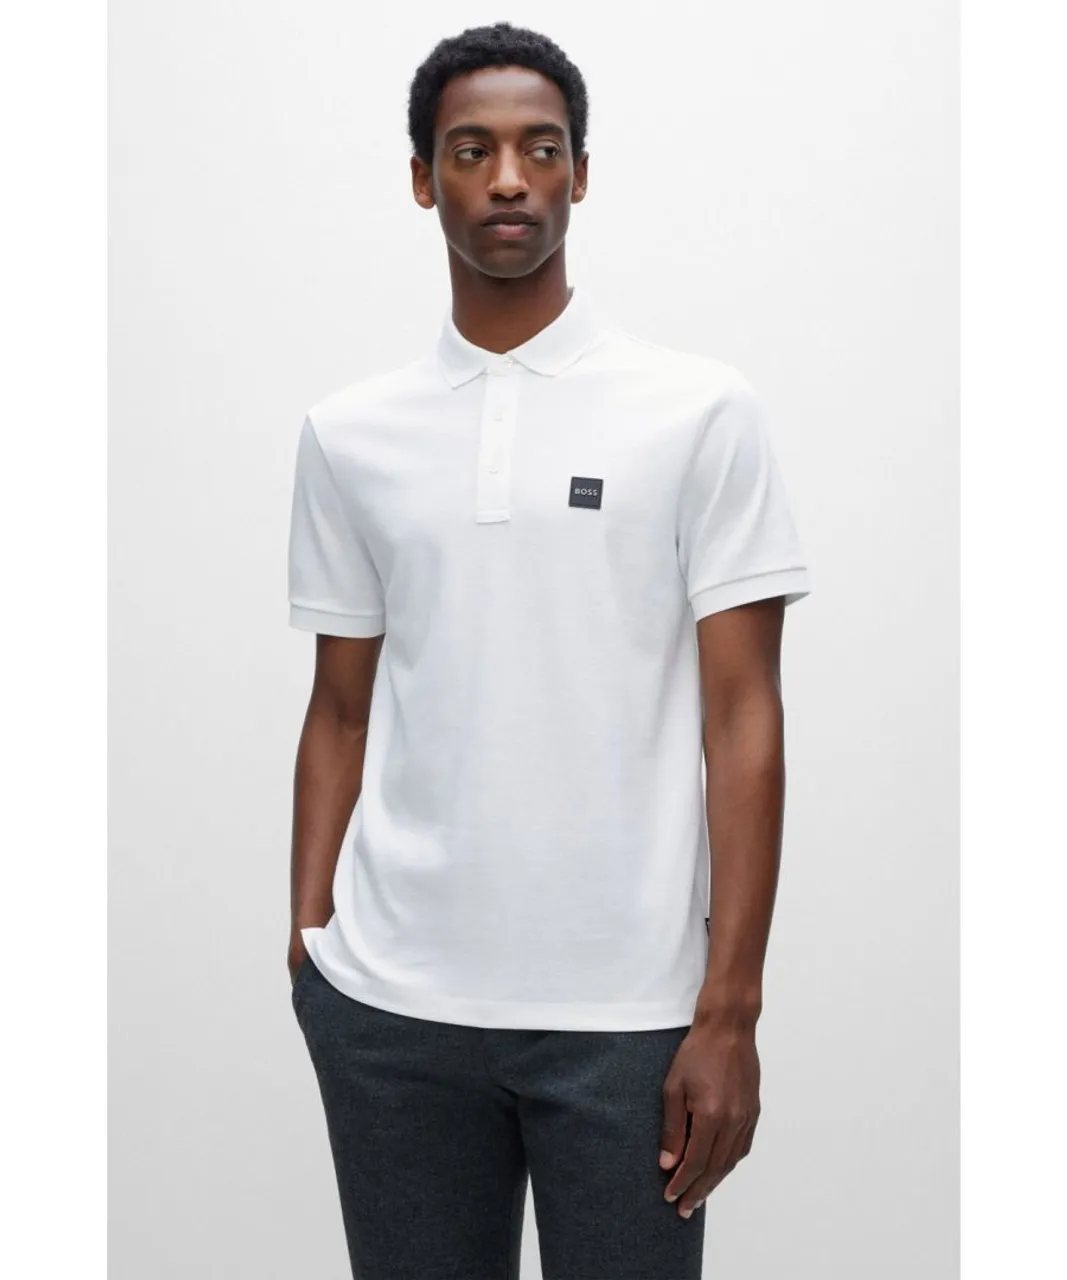 Hugo Boss Black Mens Parlay 143 Polo Shirt White